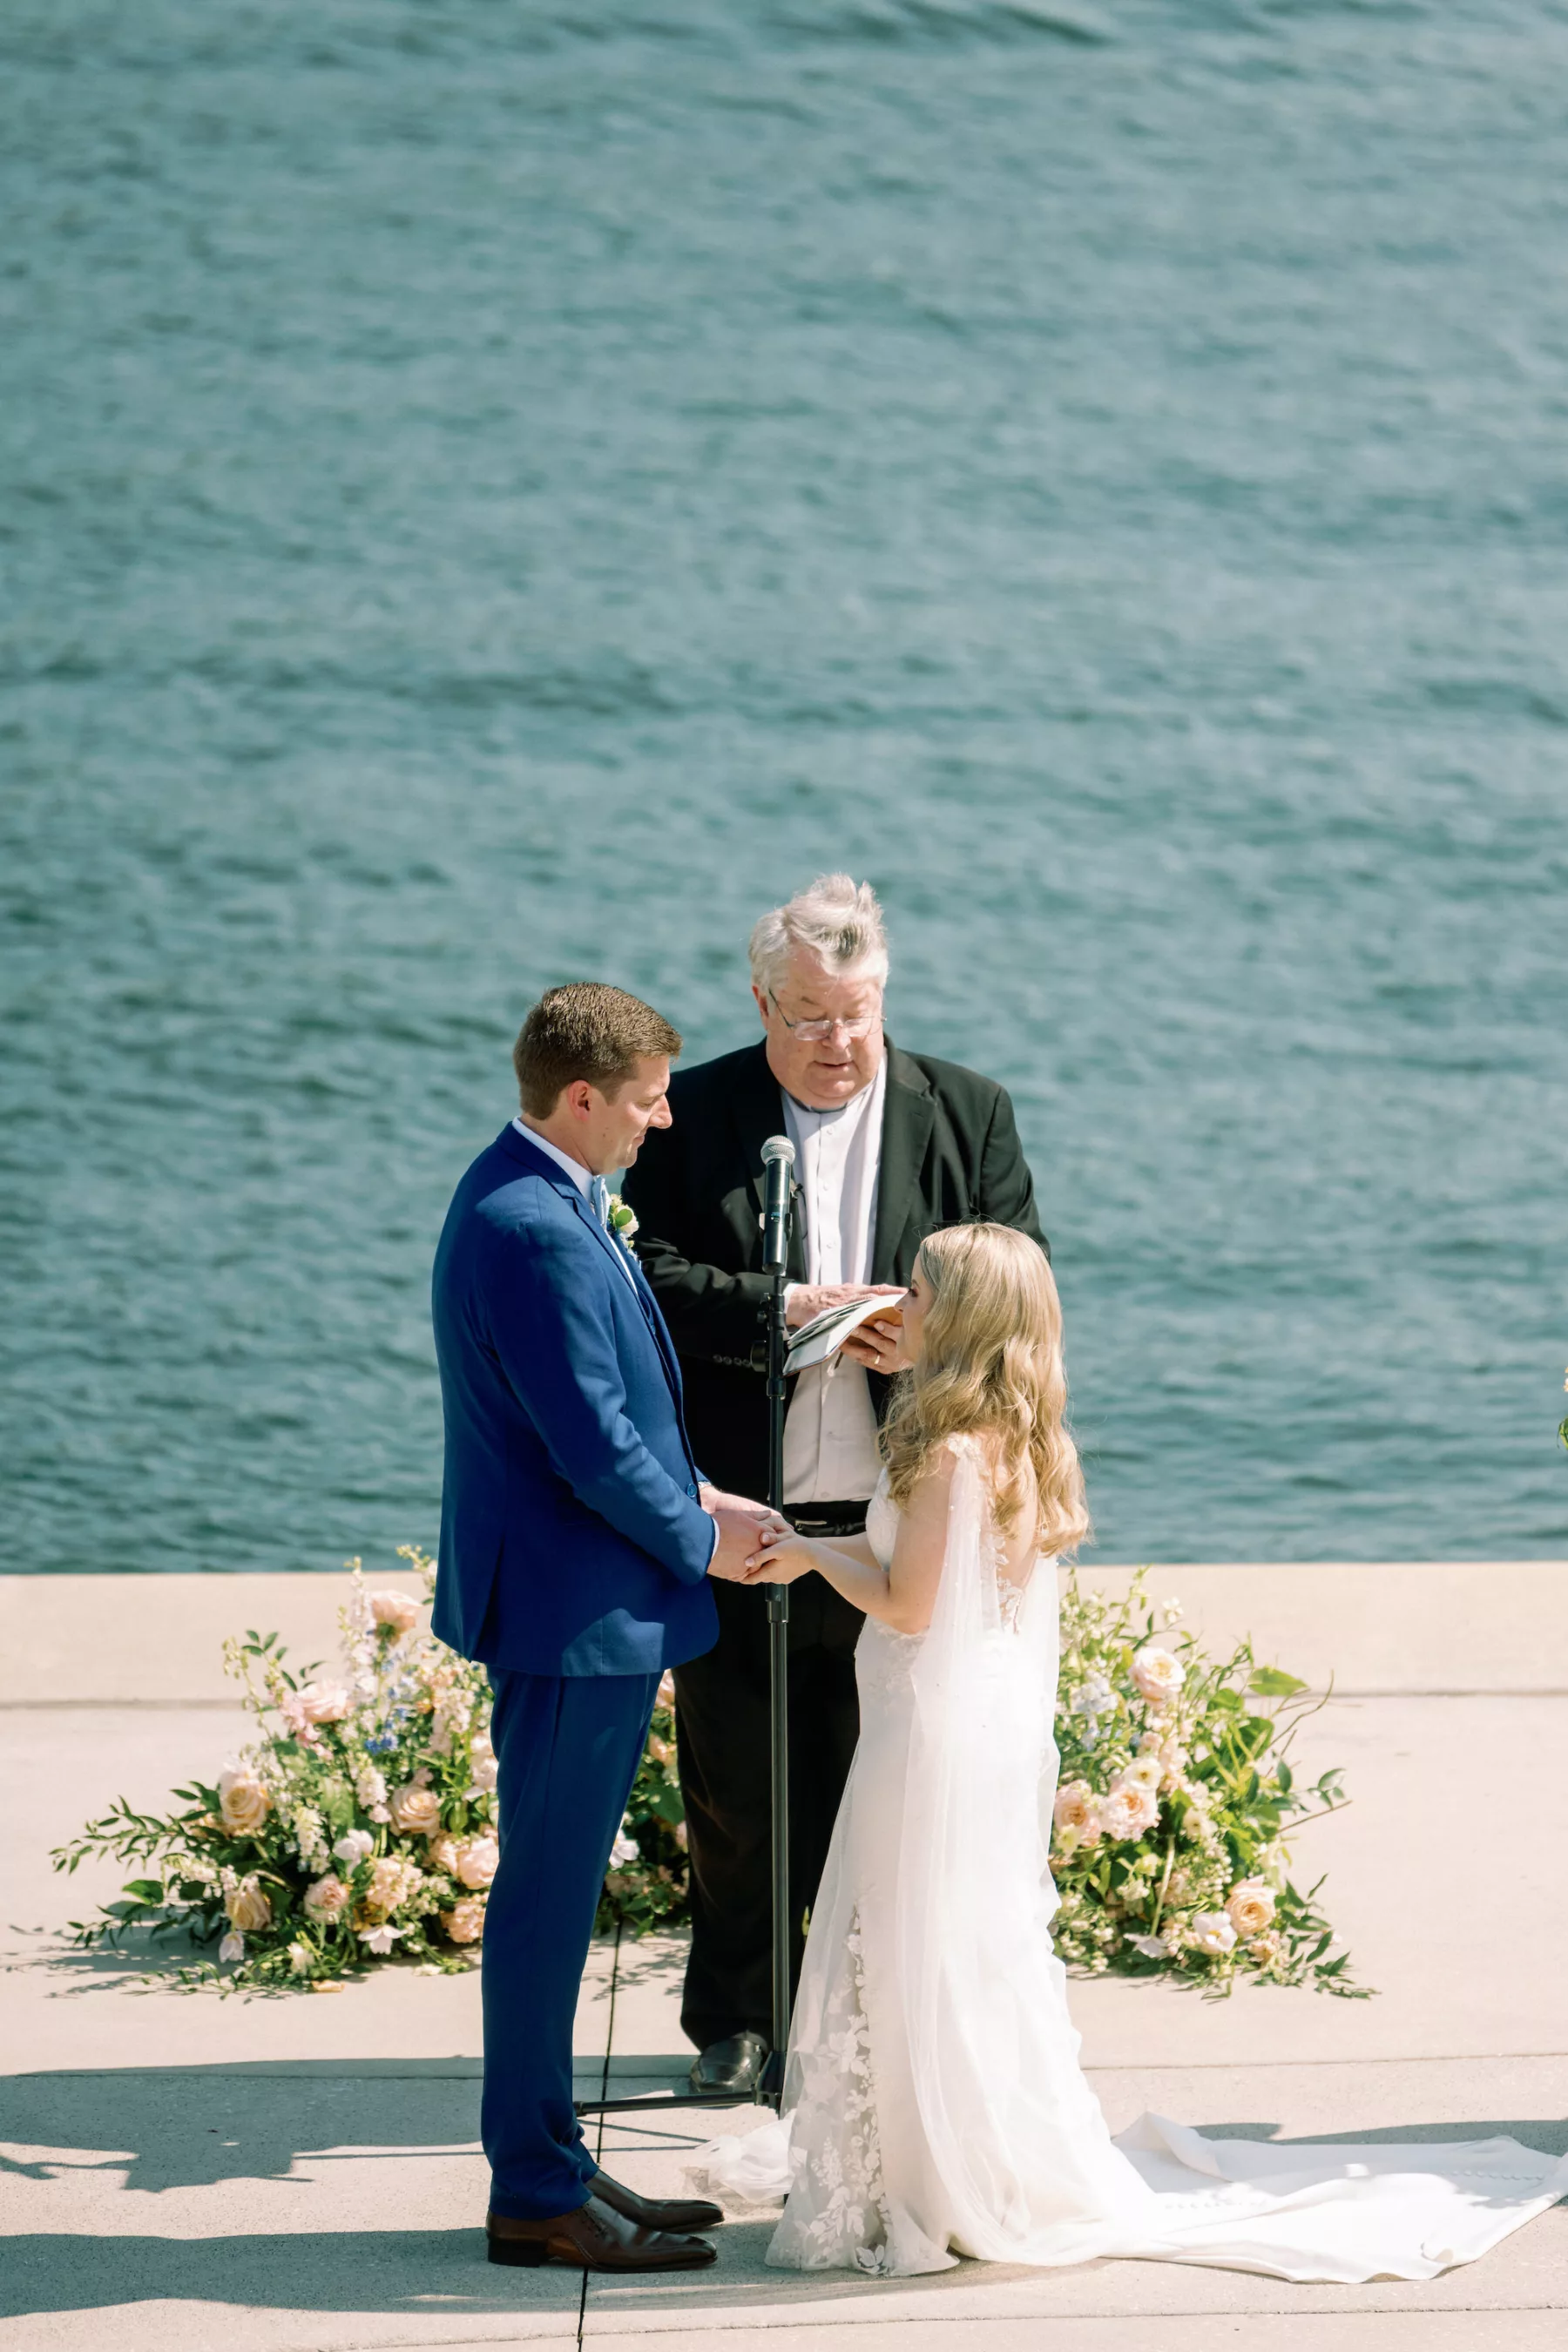 Bride and Groom Vow Exchange at Outdoor Waterfront Wedding Ceremony Inspiraation